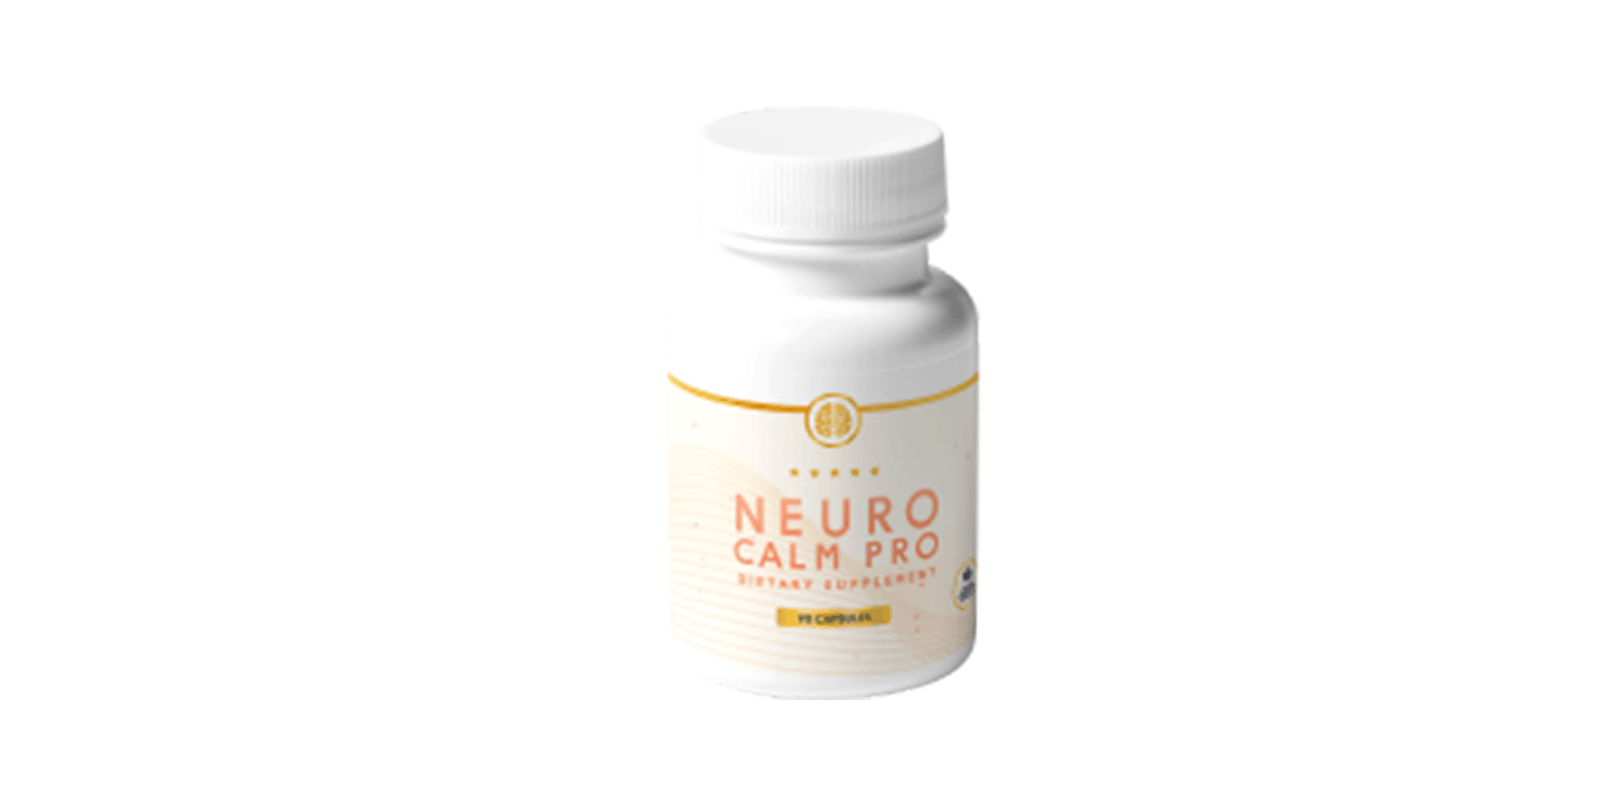 Neuro Calm Pro pills